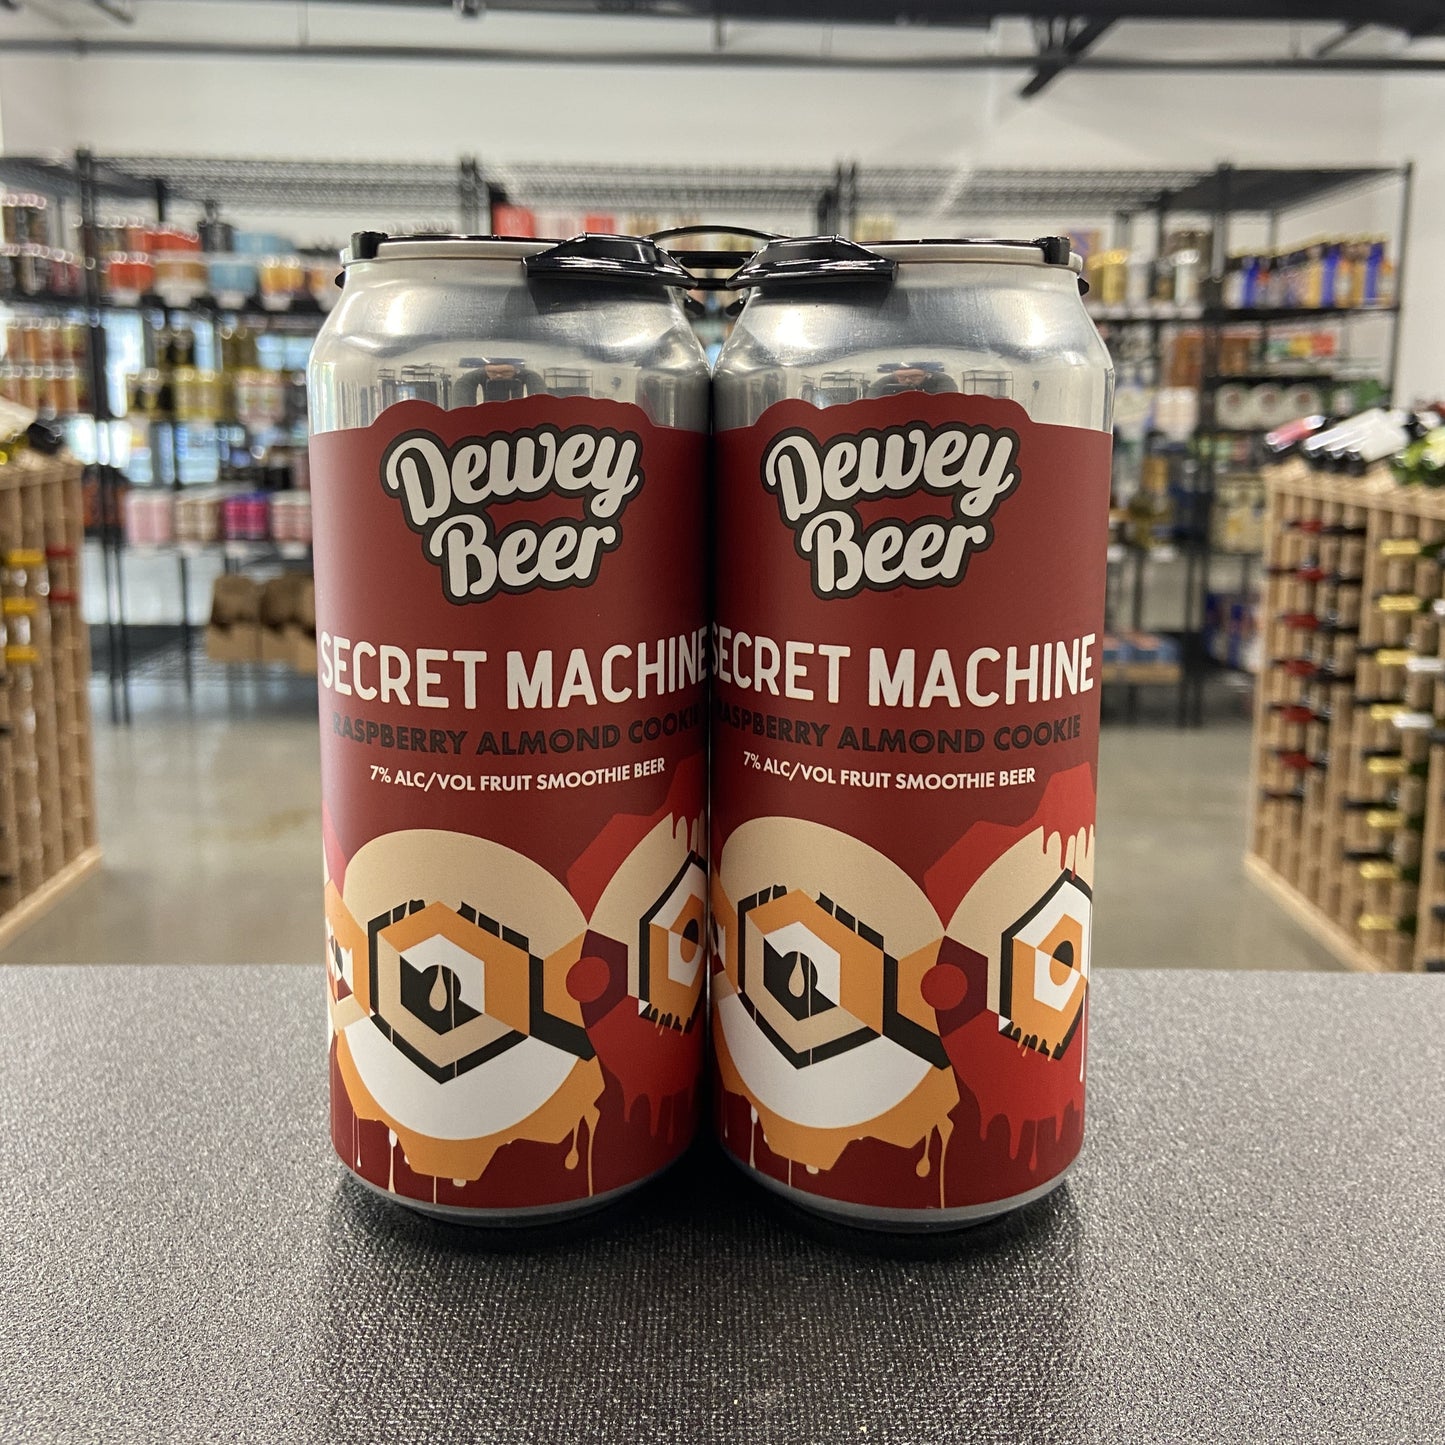 Dewey Beer Secret Machine Raspberry Almond Cookie